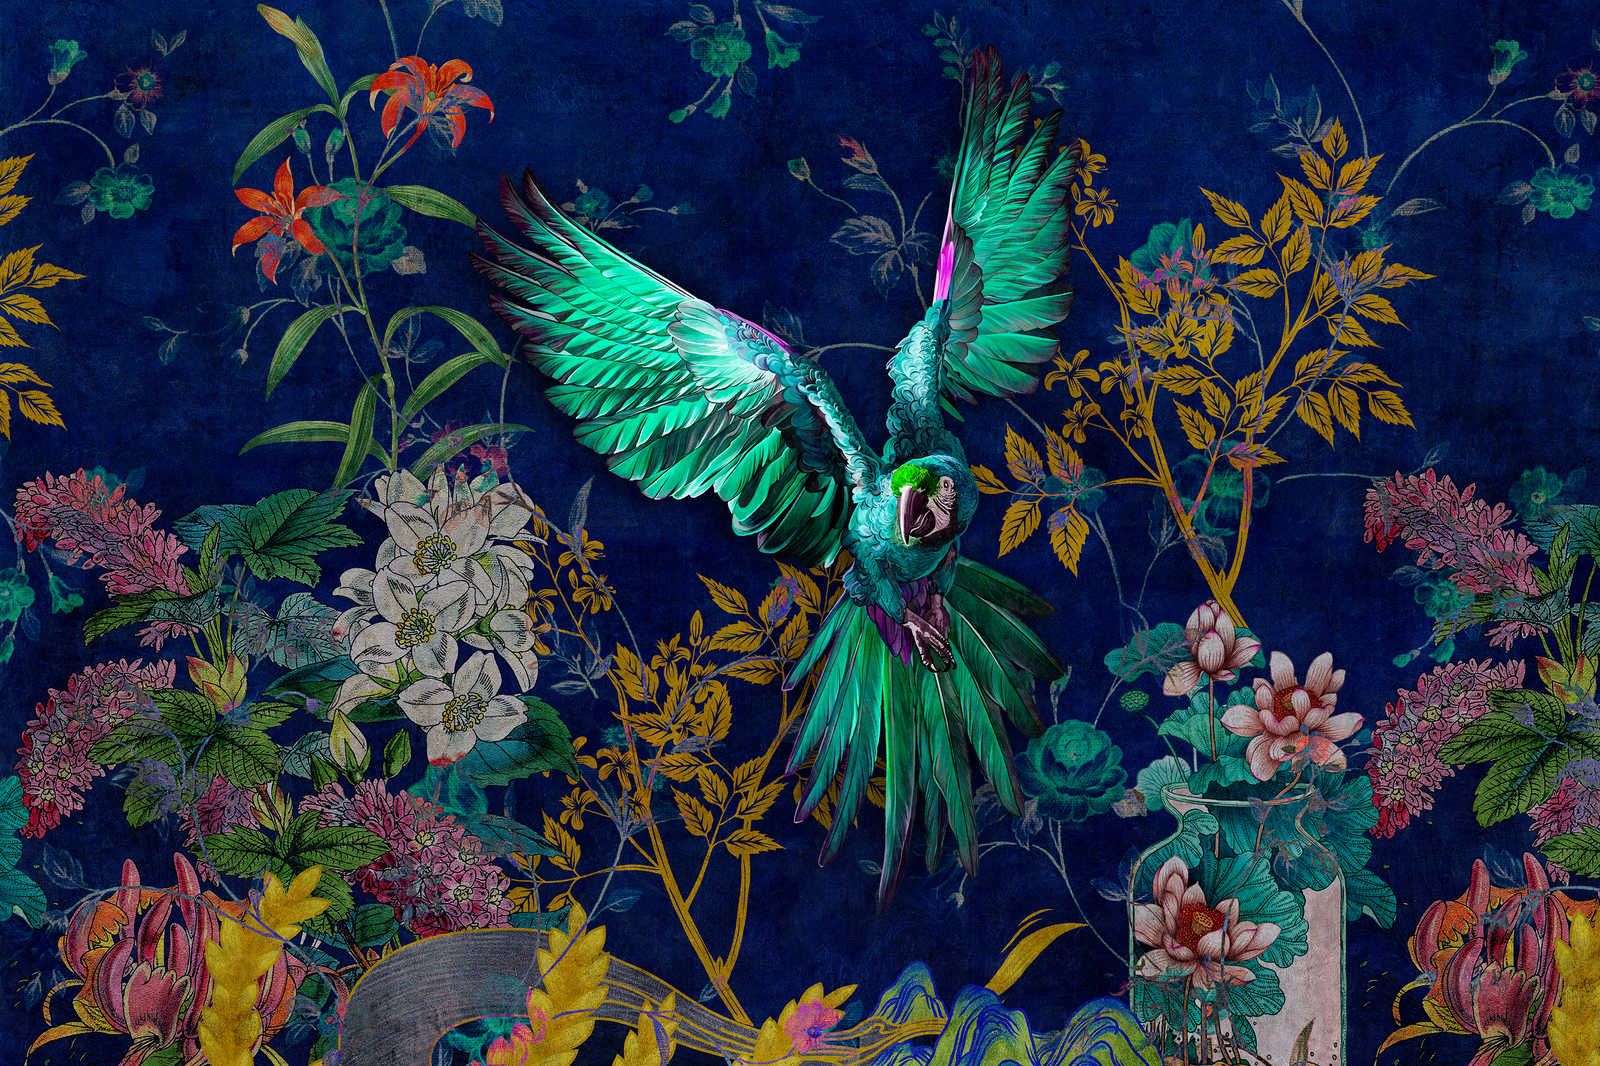             Tropical Hero 1 - Canvas painting Flowers & Parrot intense colours - 1,20 m x 0,80 m
        